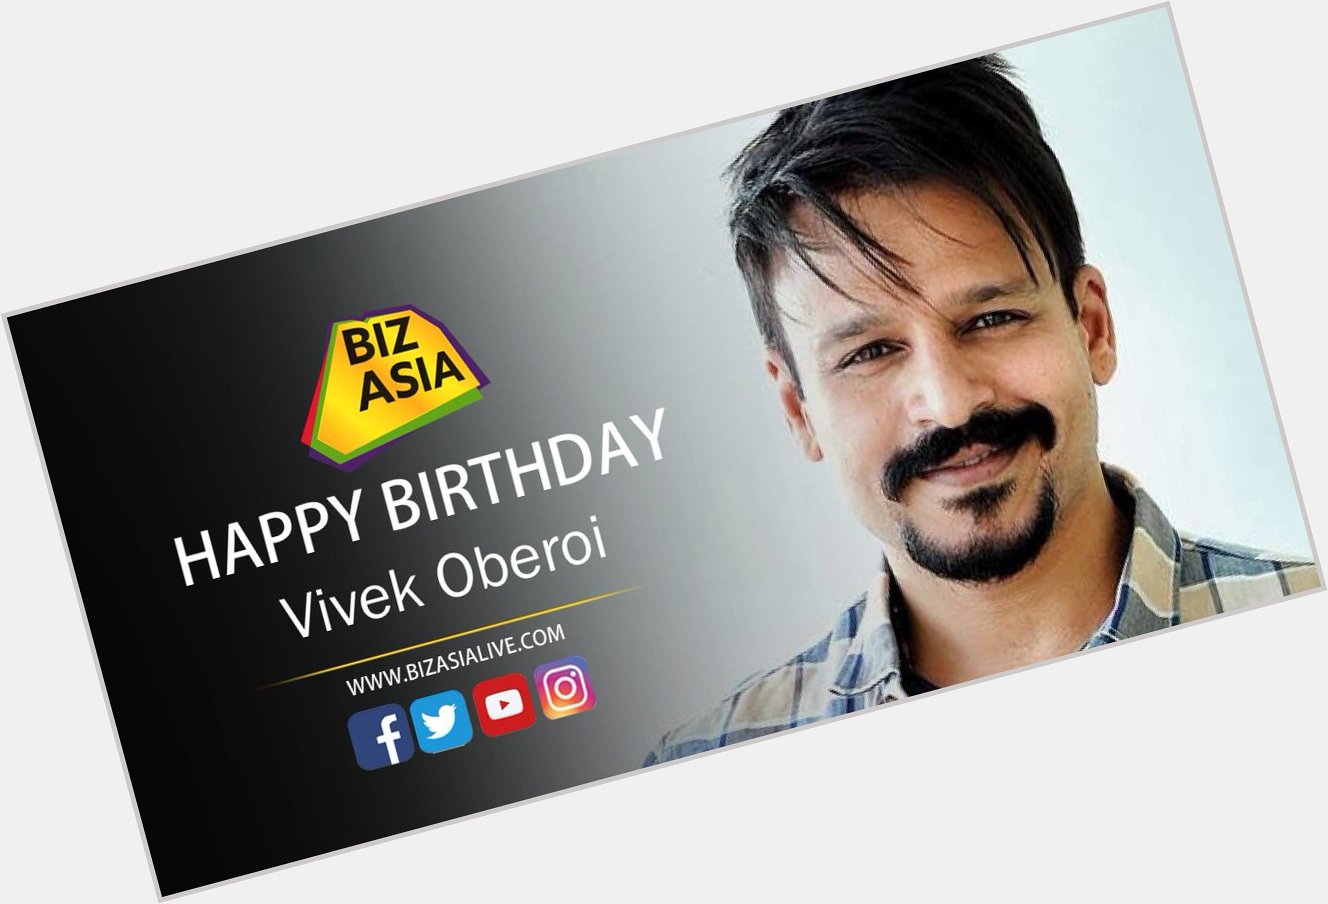  wishes Vivek Oberoi a very happy birthday.  